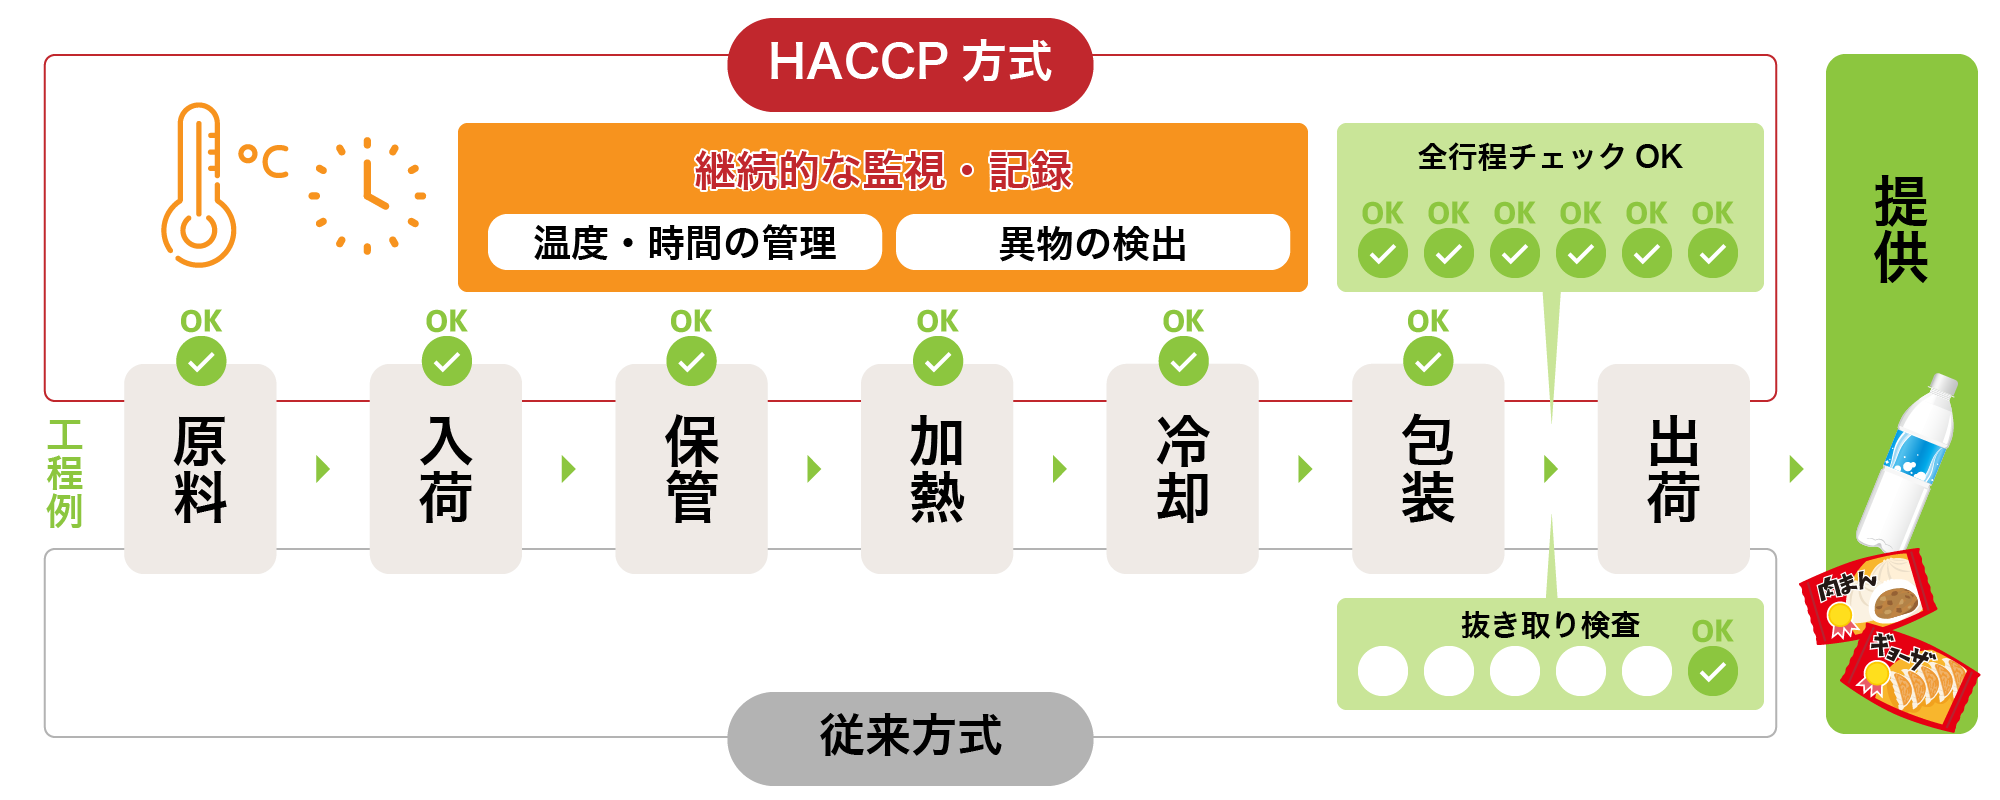 HACCP方式と従来方式との違い